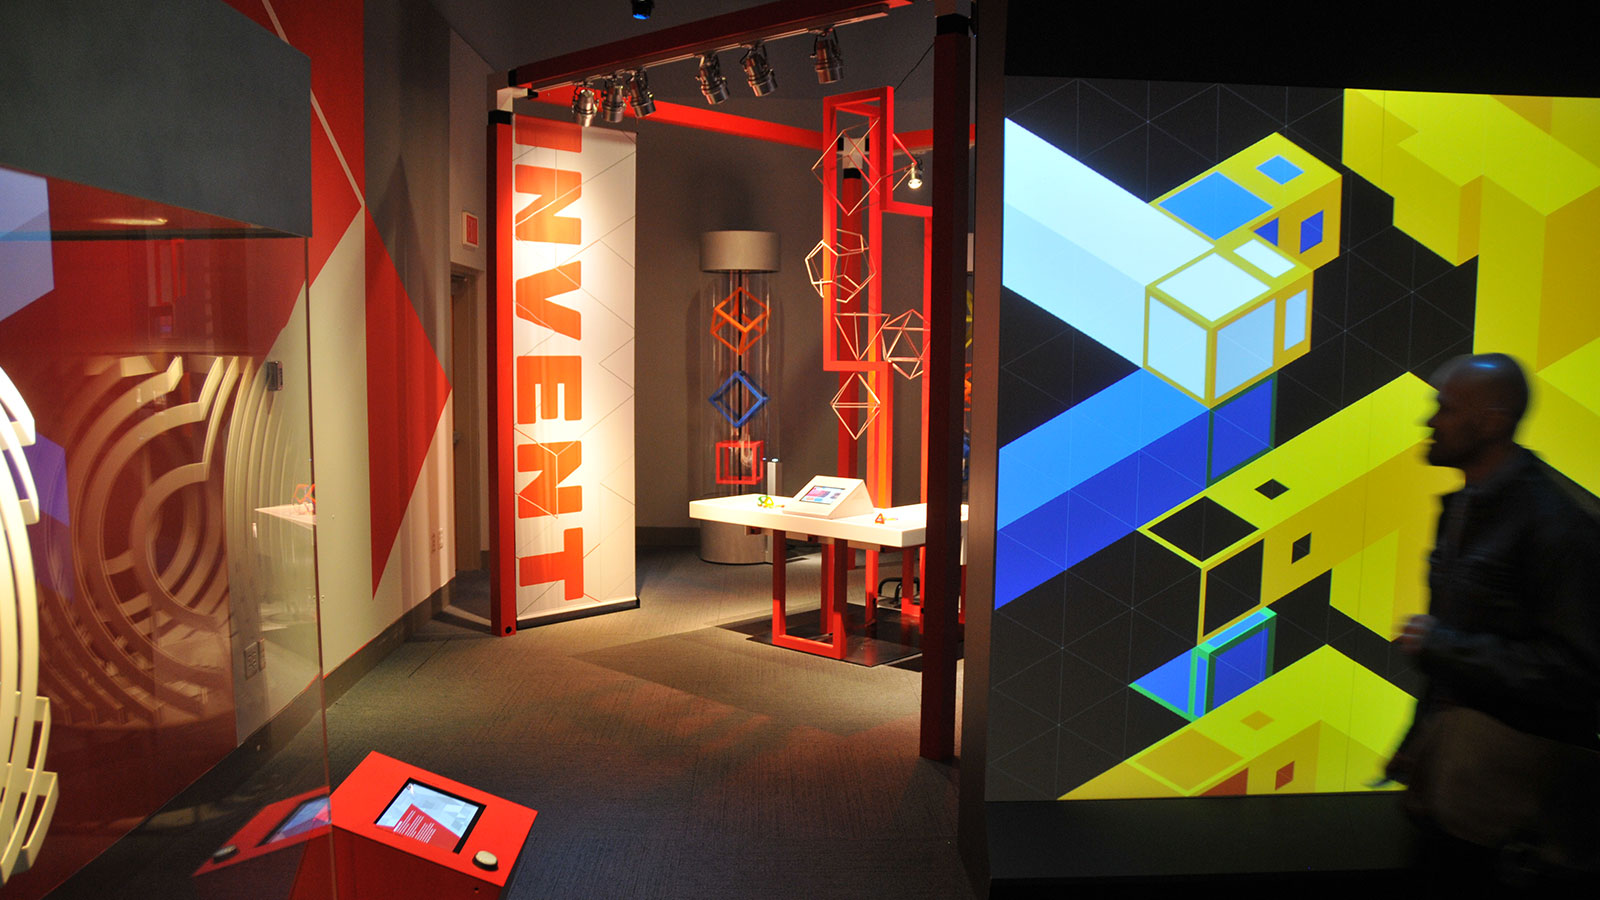 Beyond Rubik’s Cube museum, TRAVELING EXHIBIT